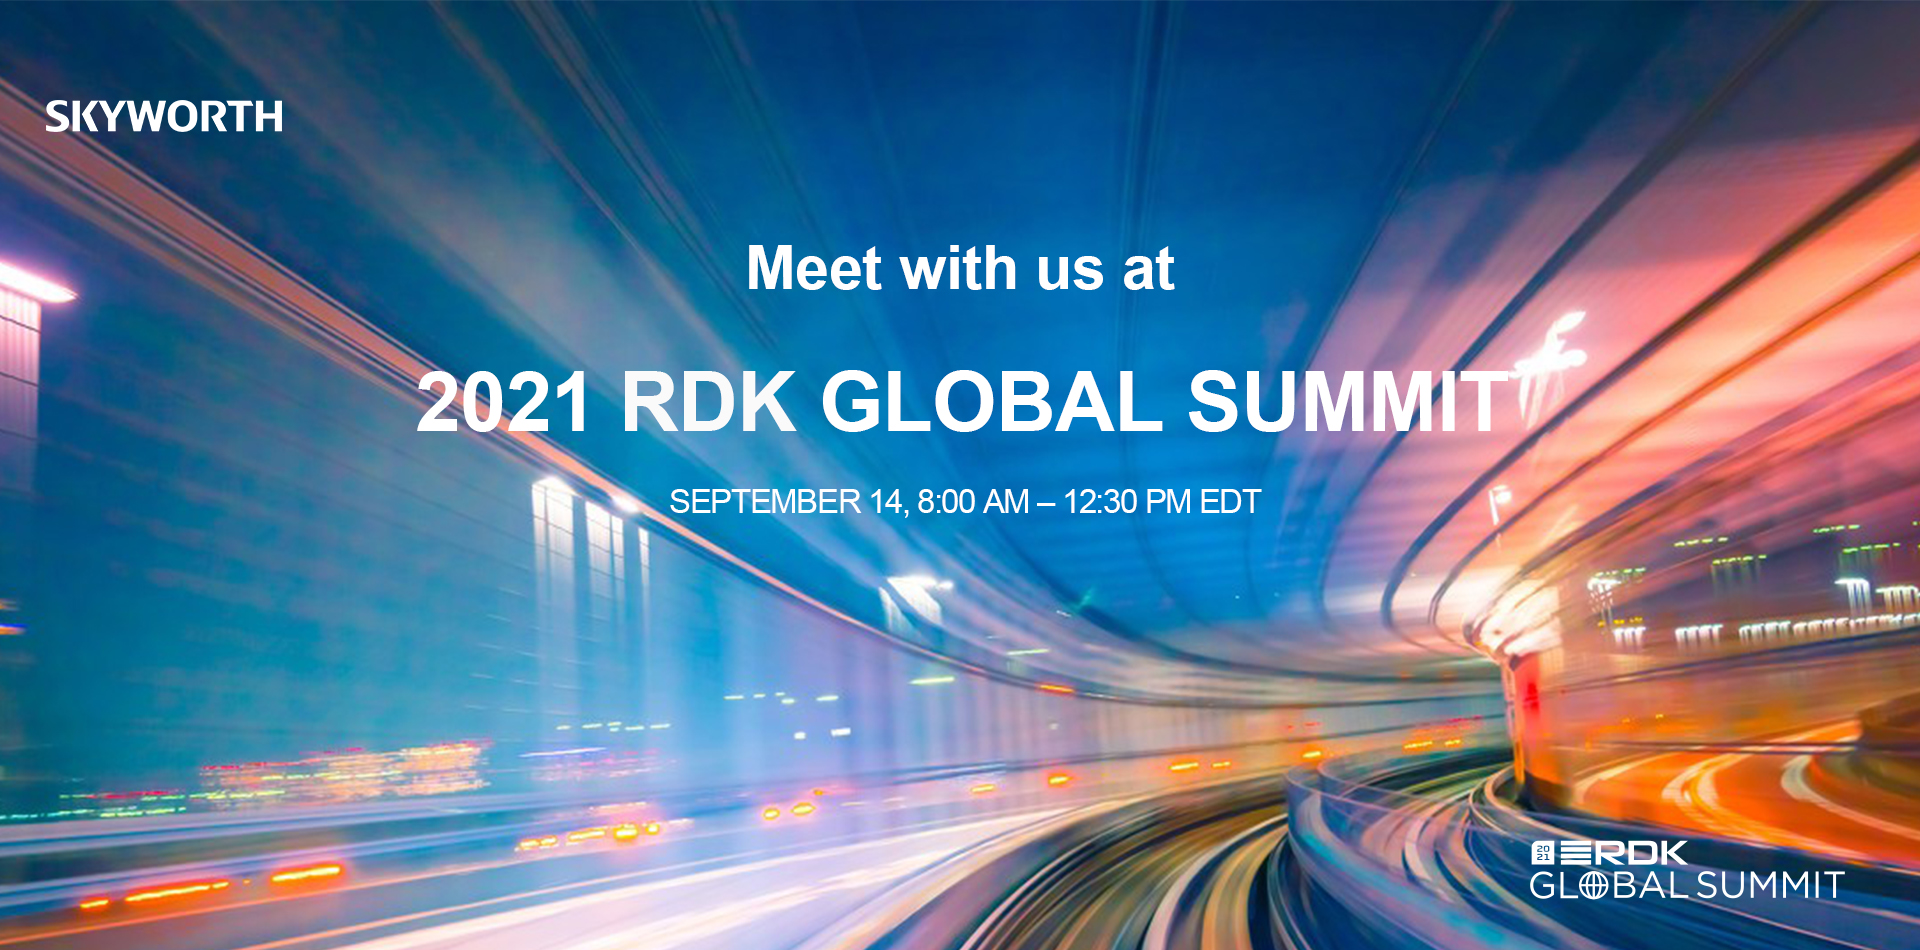 Invitation of 2021 RDK global summit